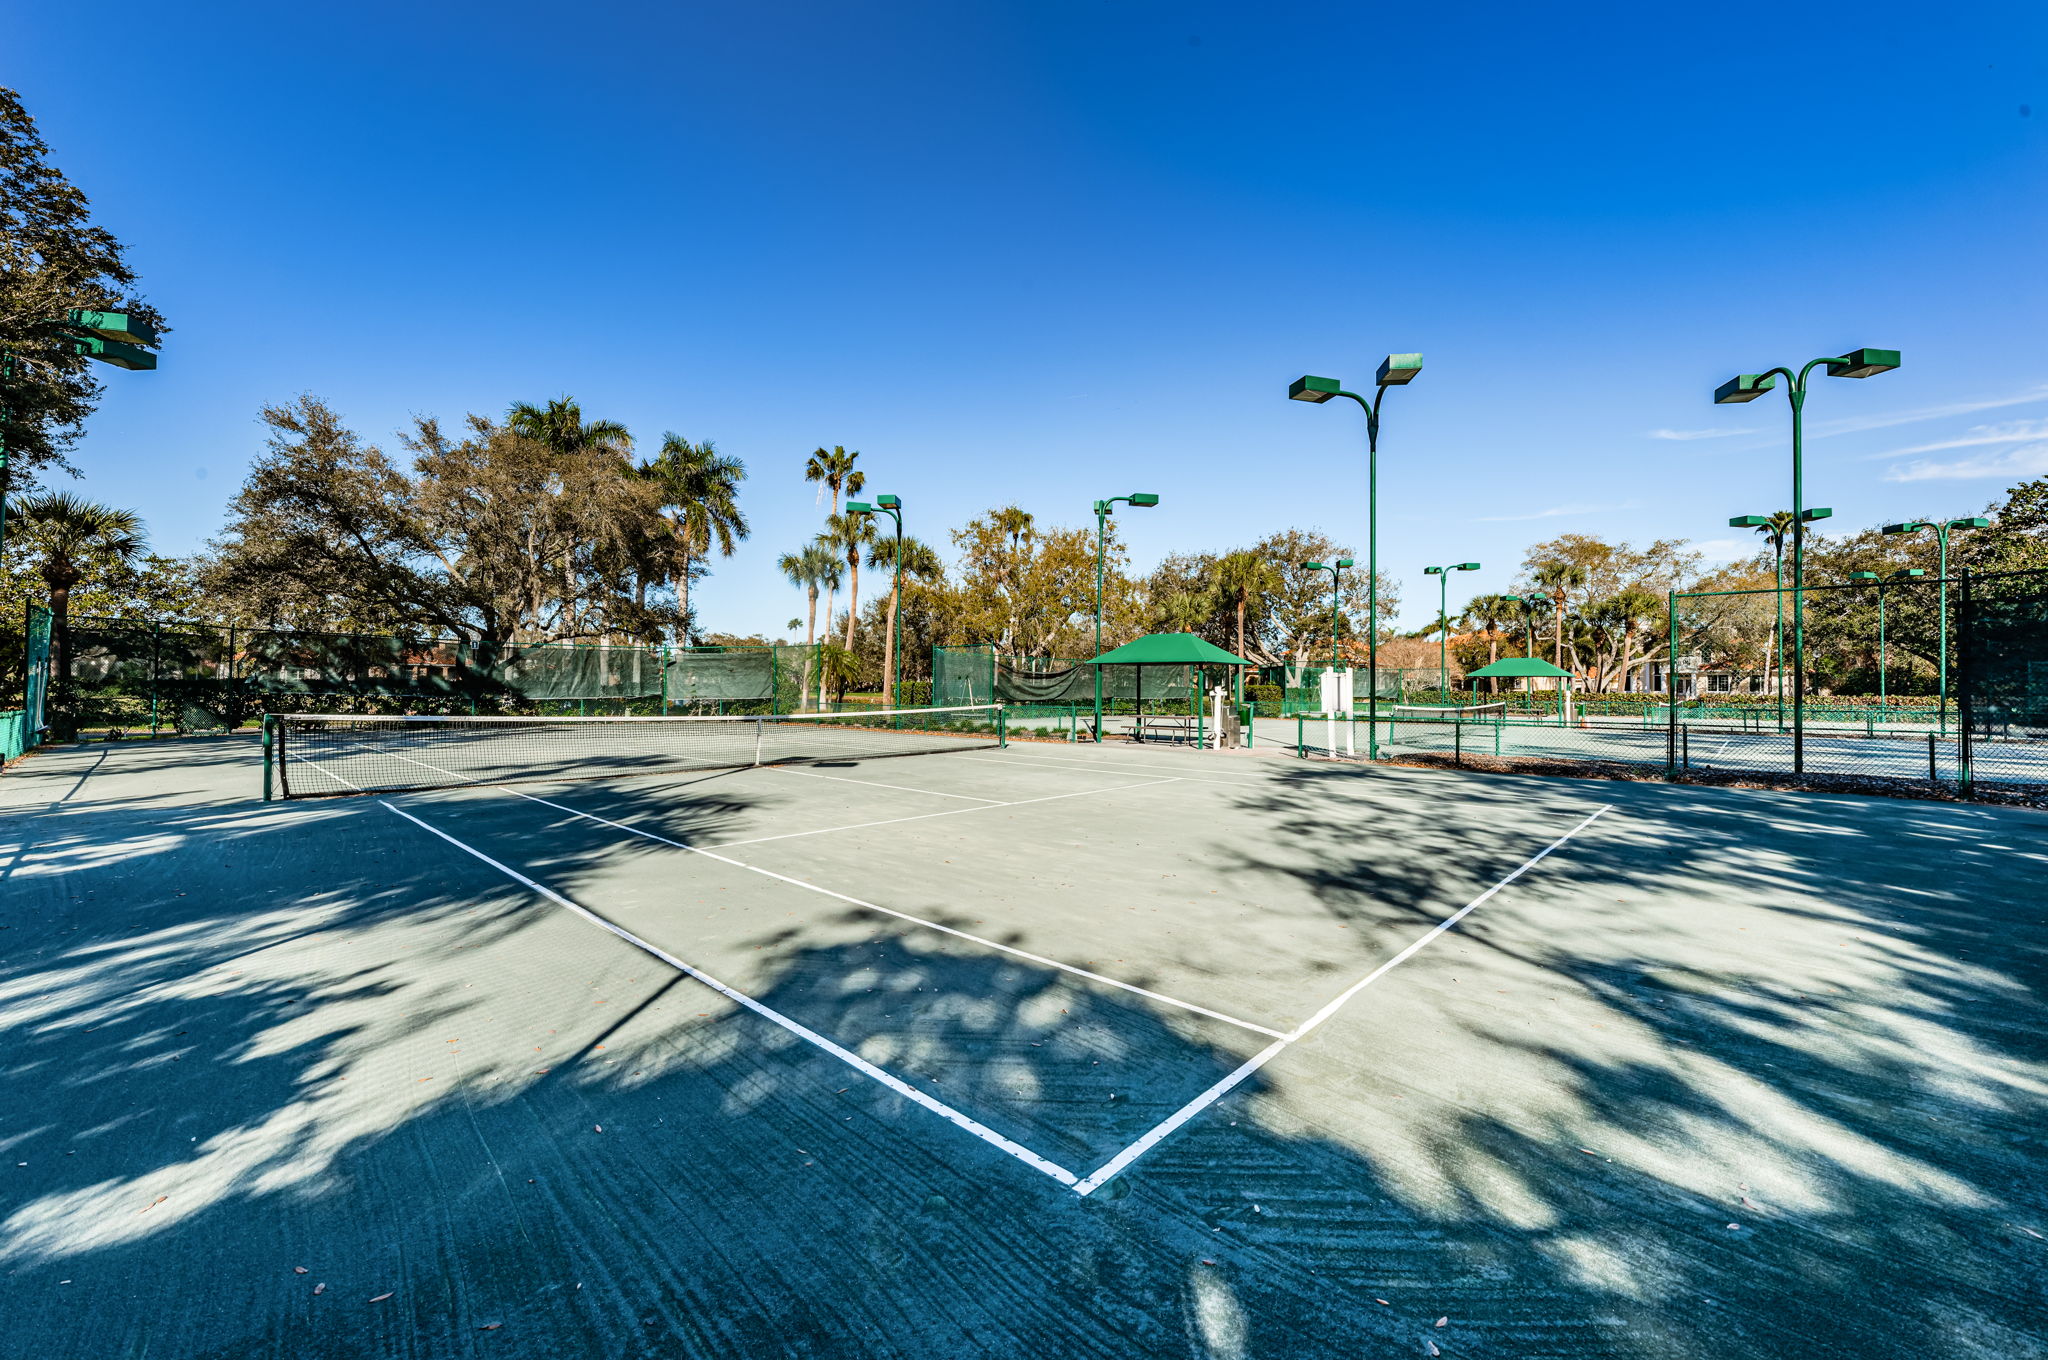 Tennis Courts2